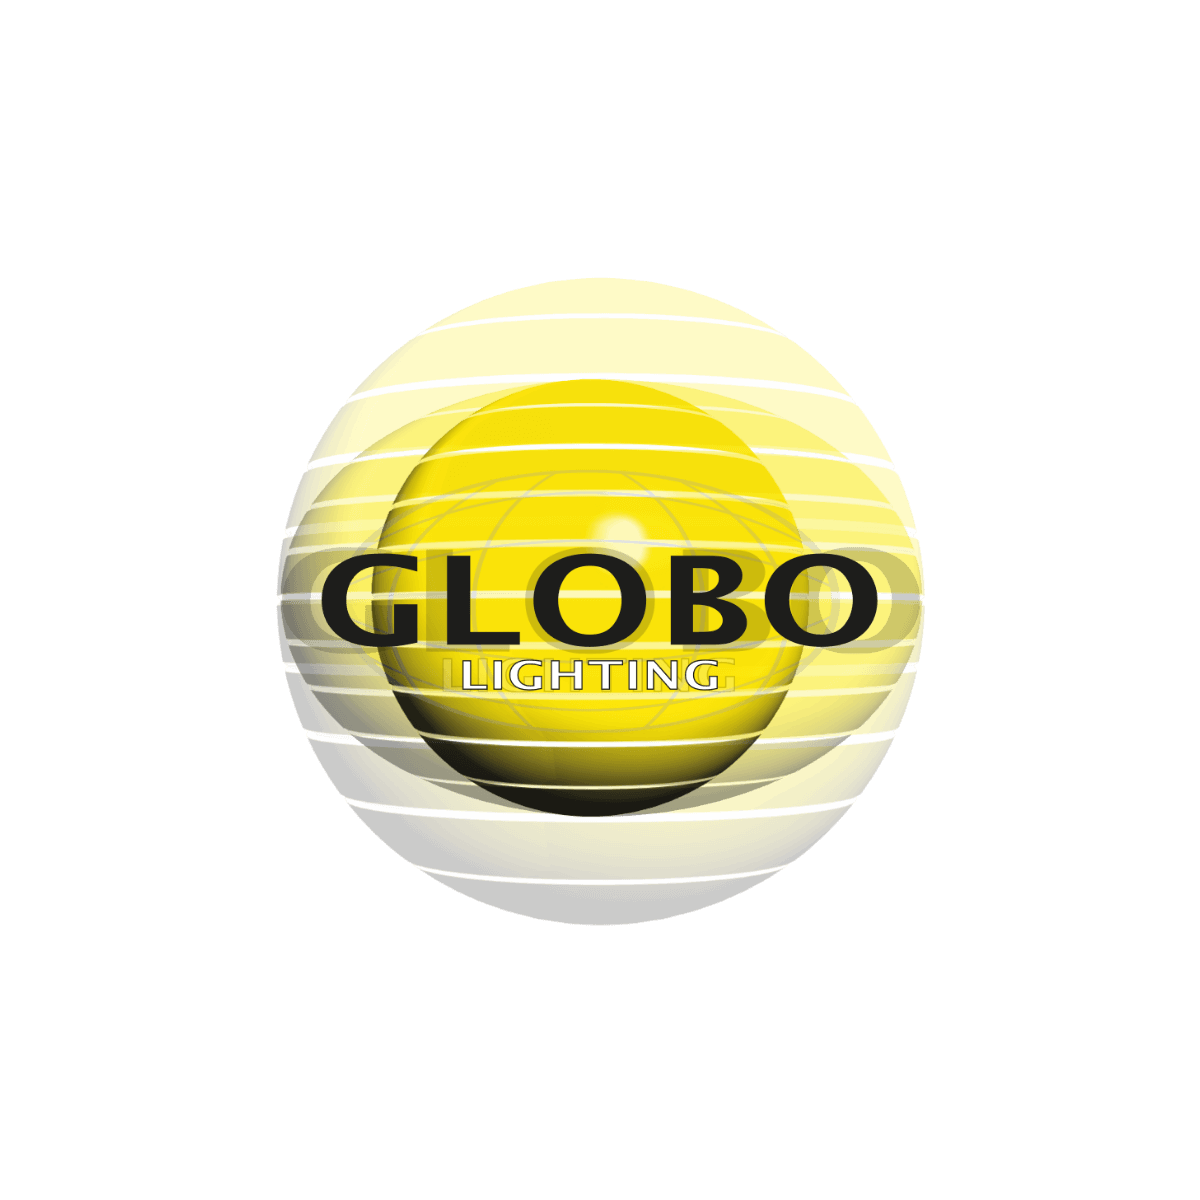 Globo